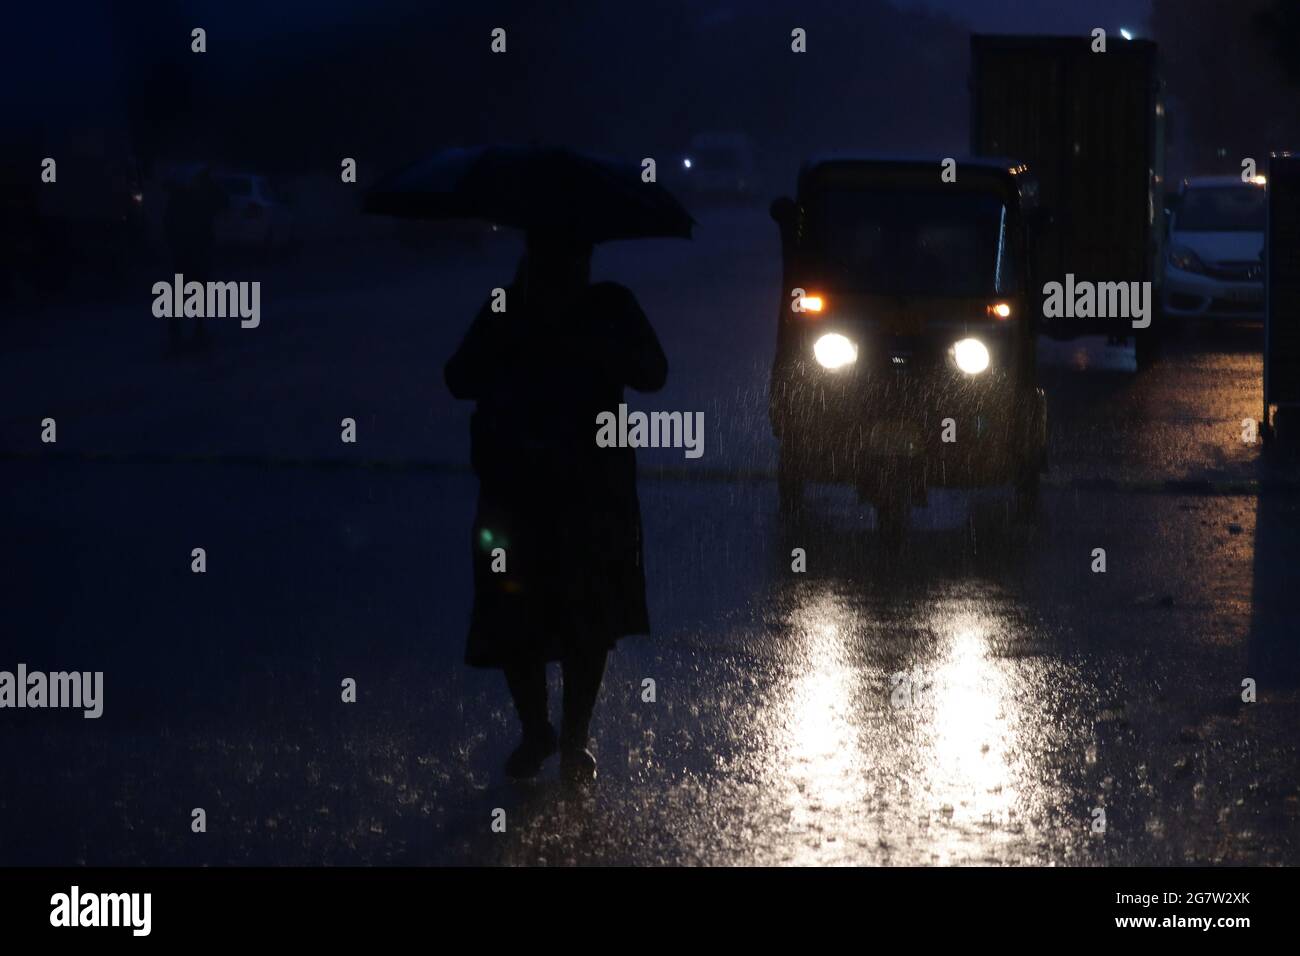 Chennai, Tamil Nadu, India. 16th July, 2021. During a heavy rainstorm, a woman takes shelter under an umbrella while walking down a street in Chennai. Credit: Sri Loganathan/ZUMA Wire/Alamy Live News Stock Photo